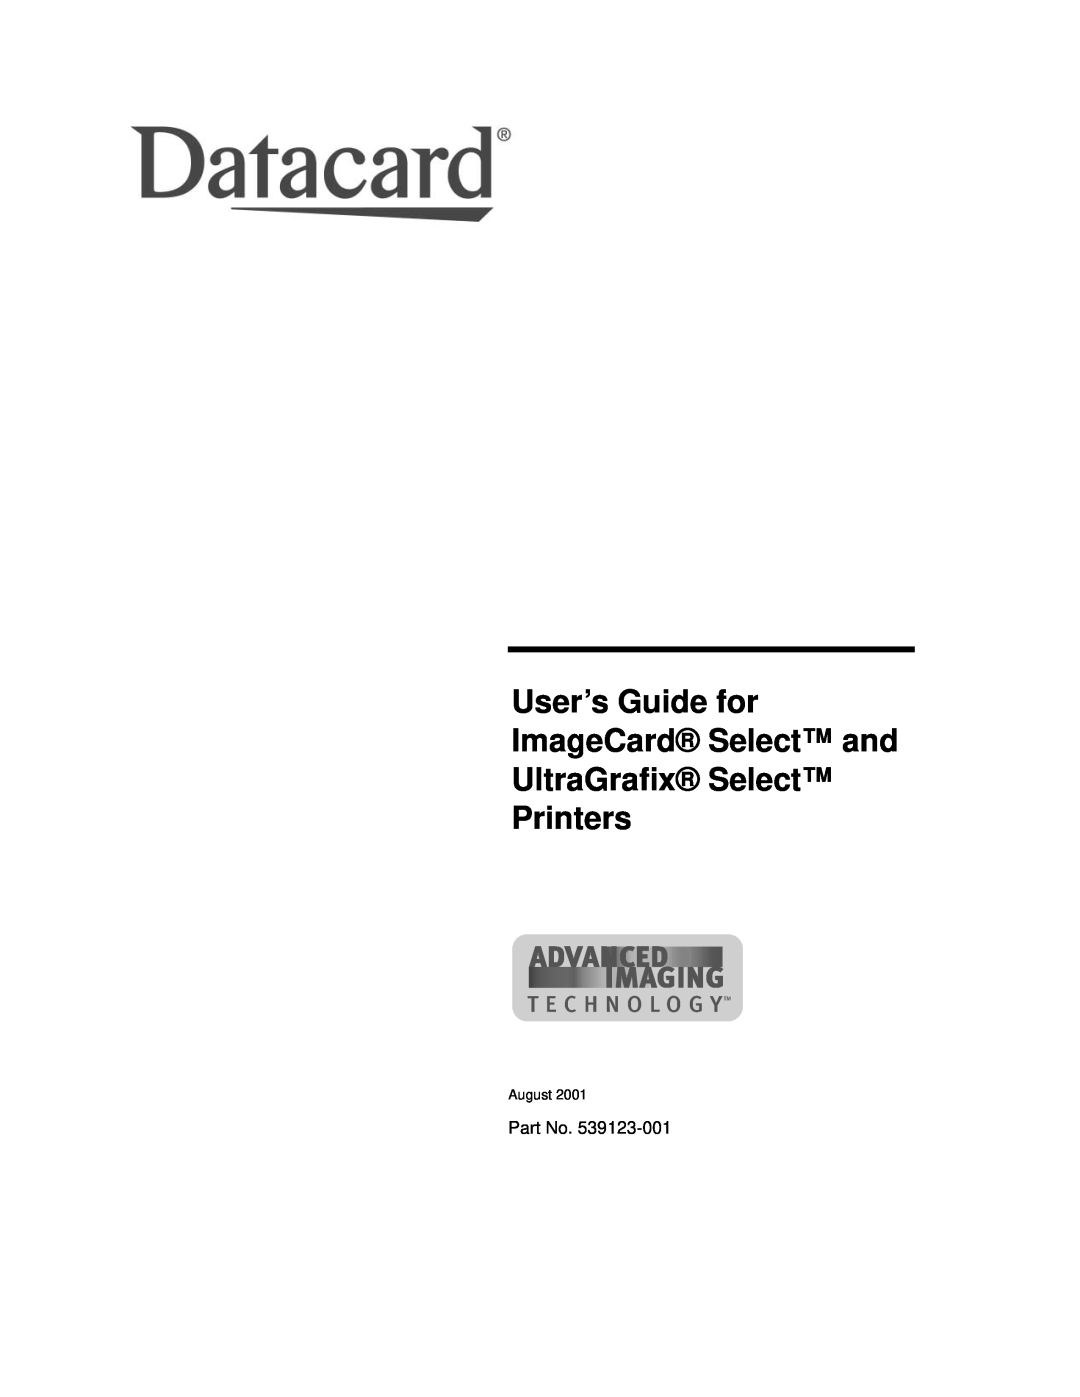 Datacard Group ImageCard SelectTM and UltraGrafix SelectTM Printers manual August 